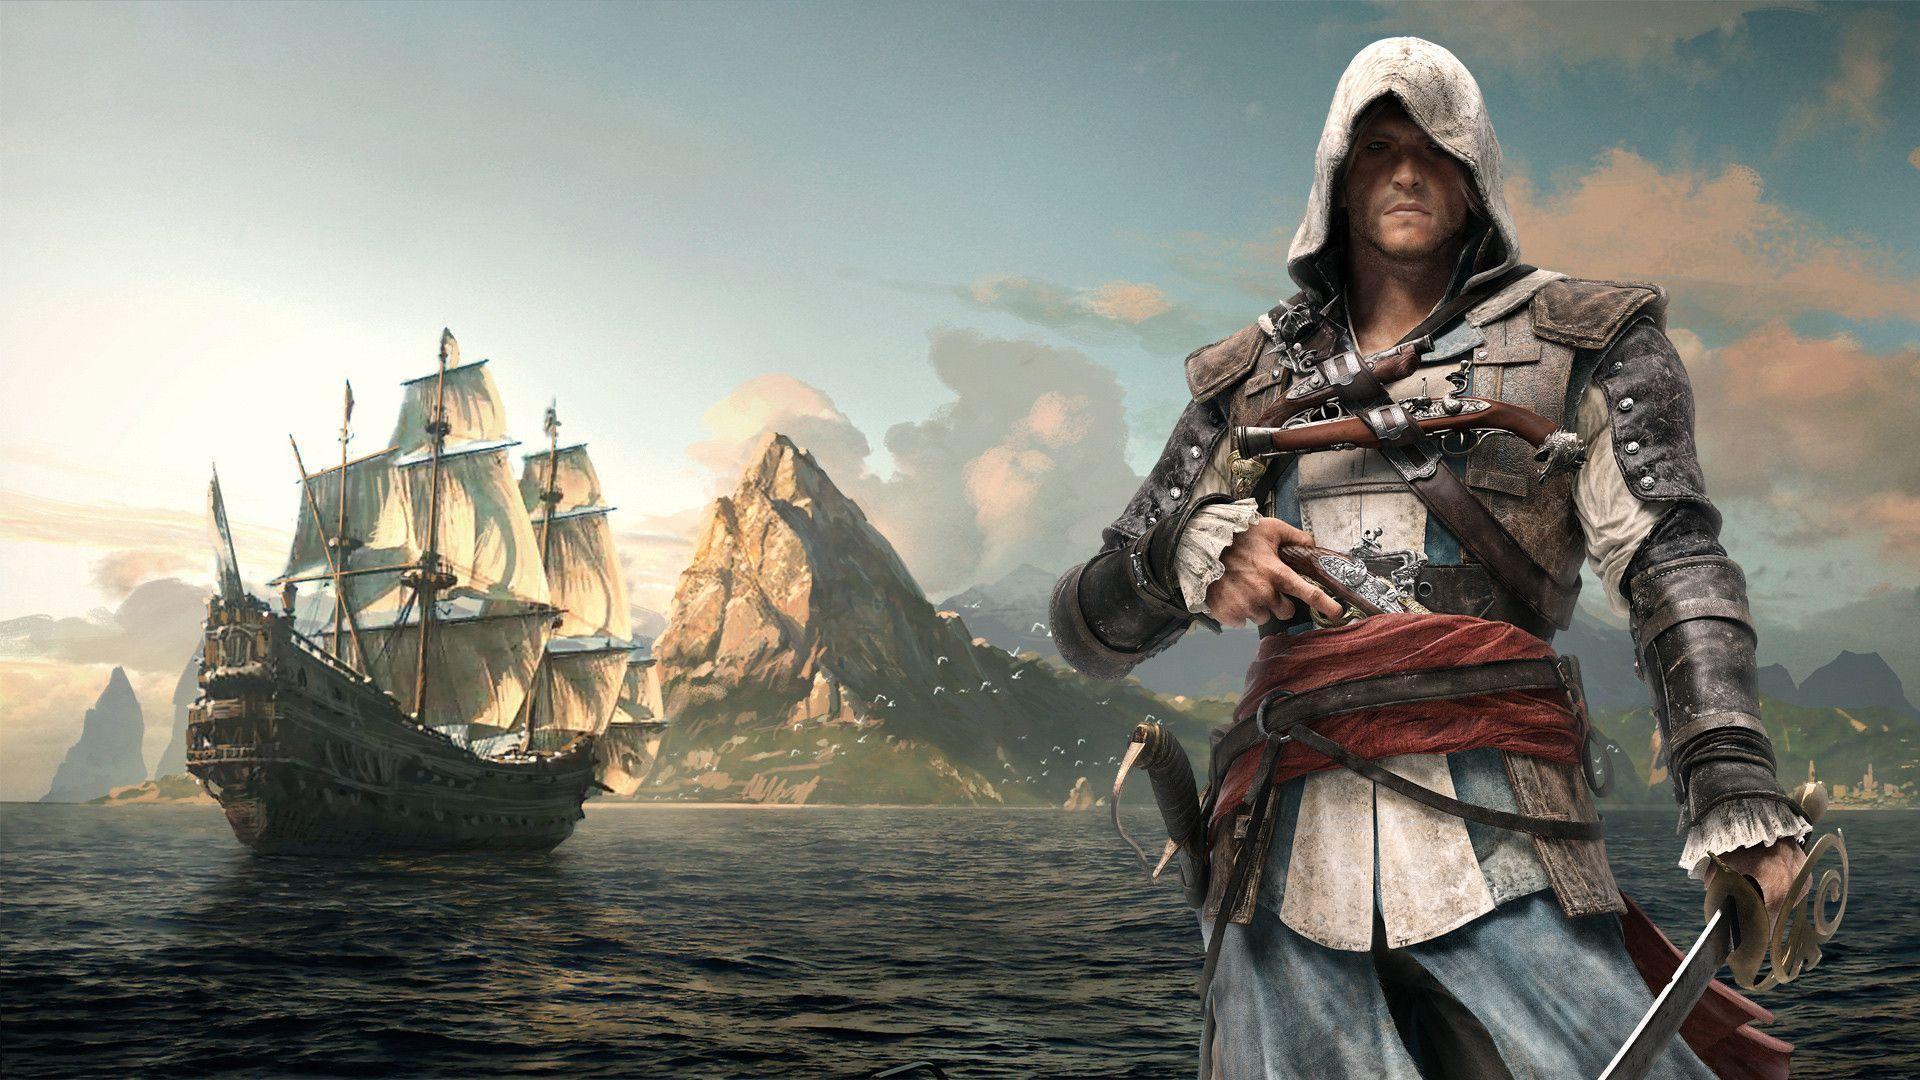 Assassin's Creed Black Flag Wallpapers on WallpaperDog